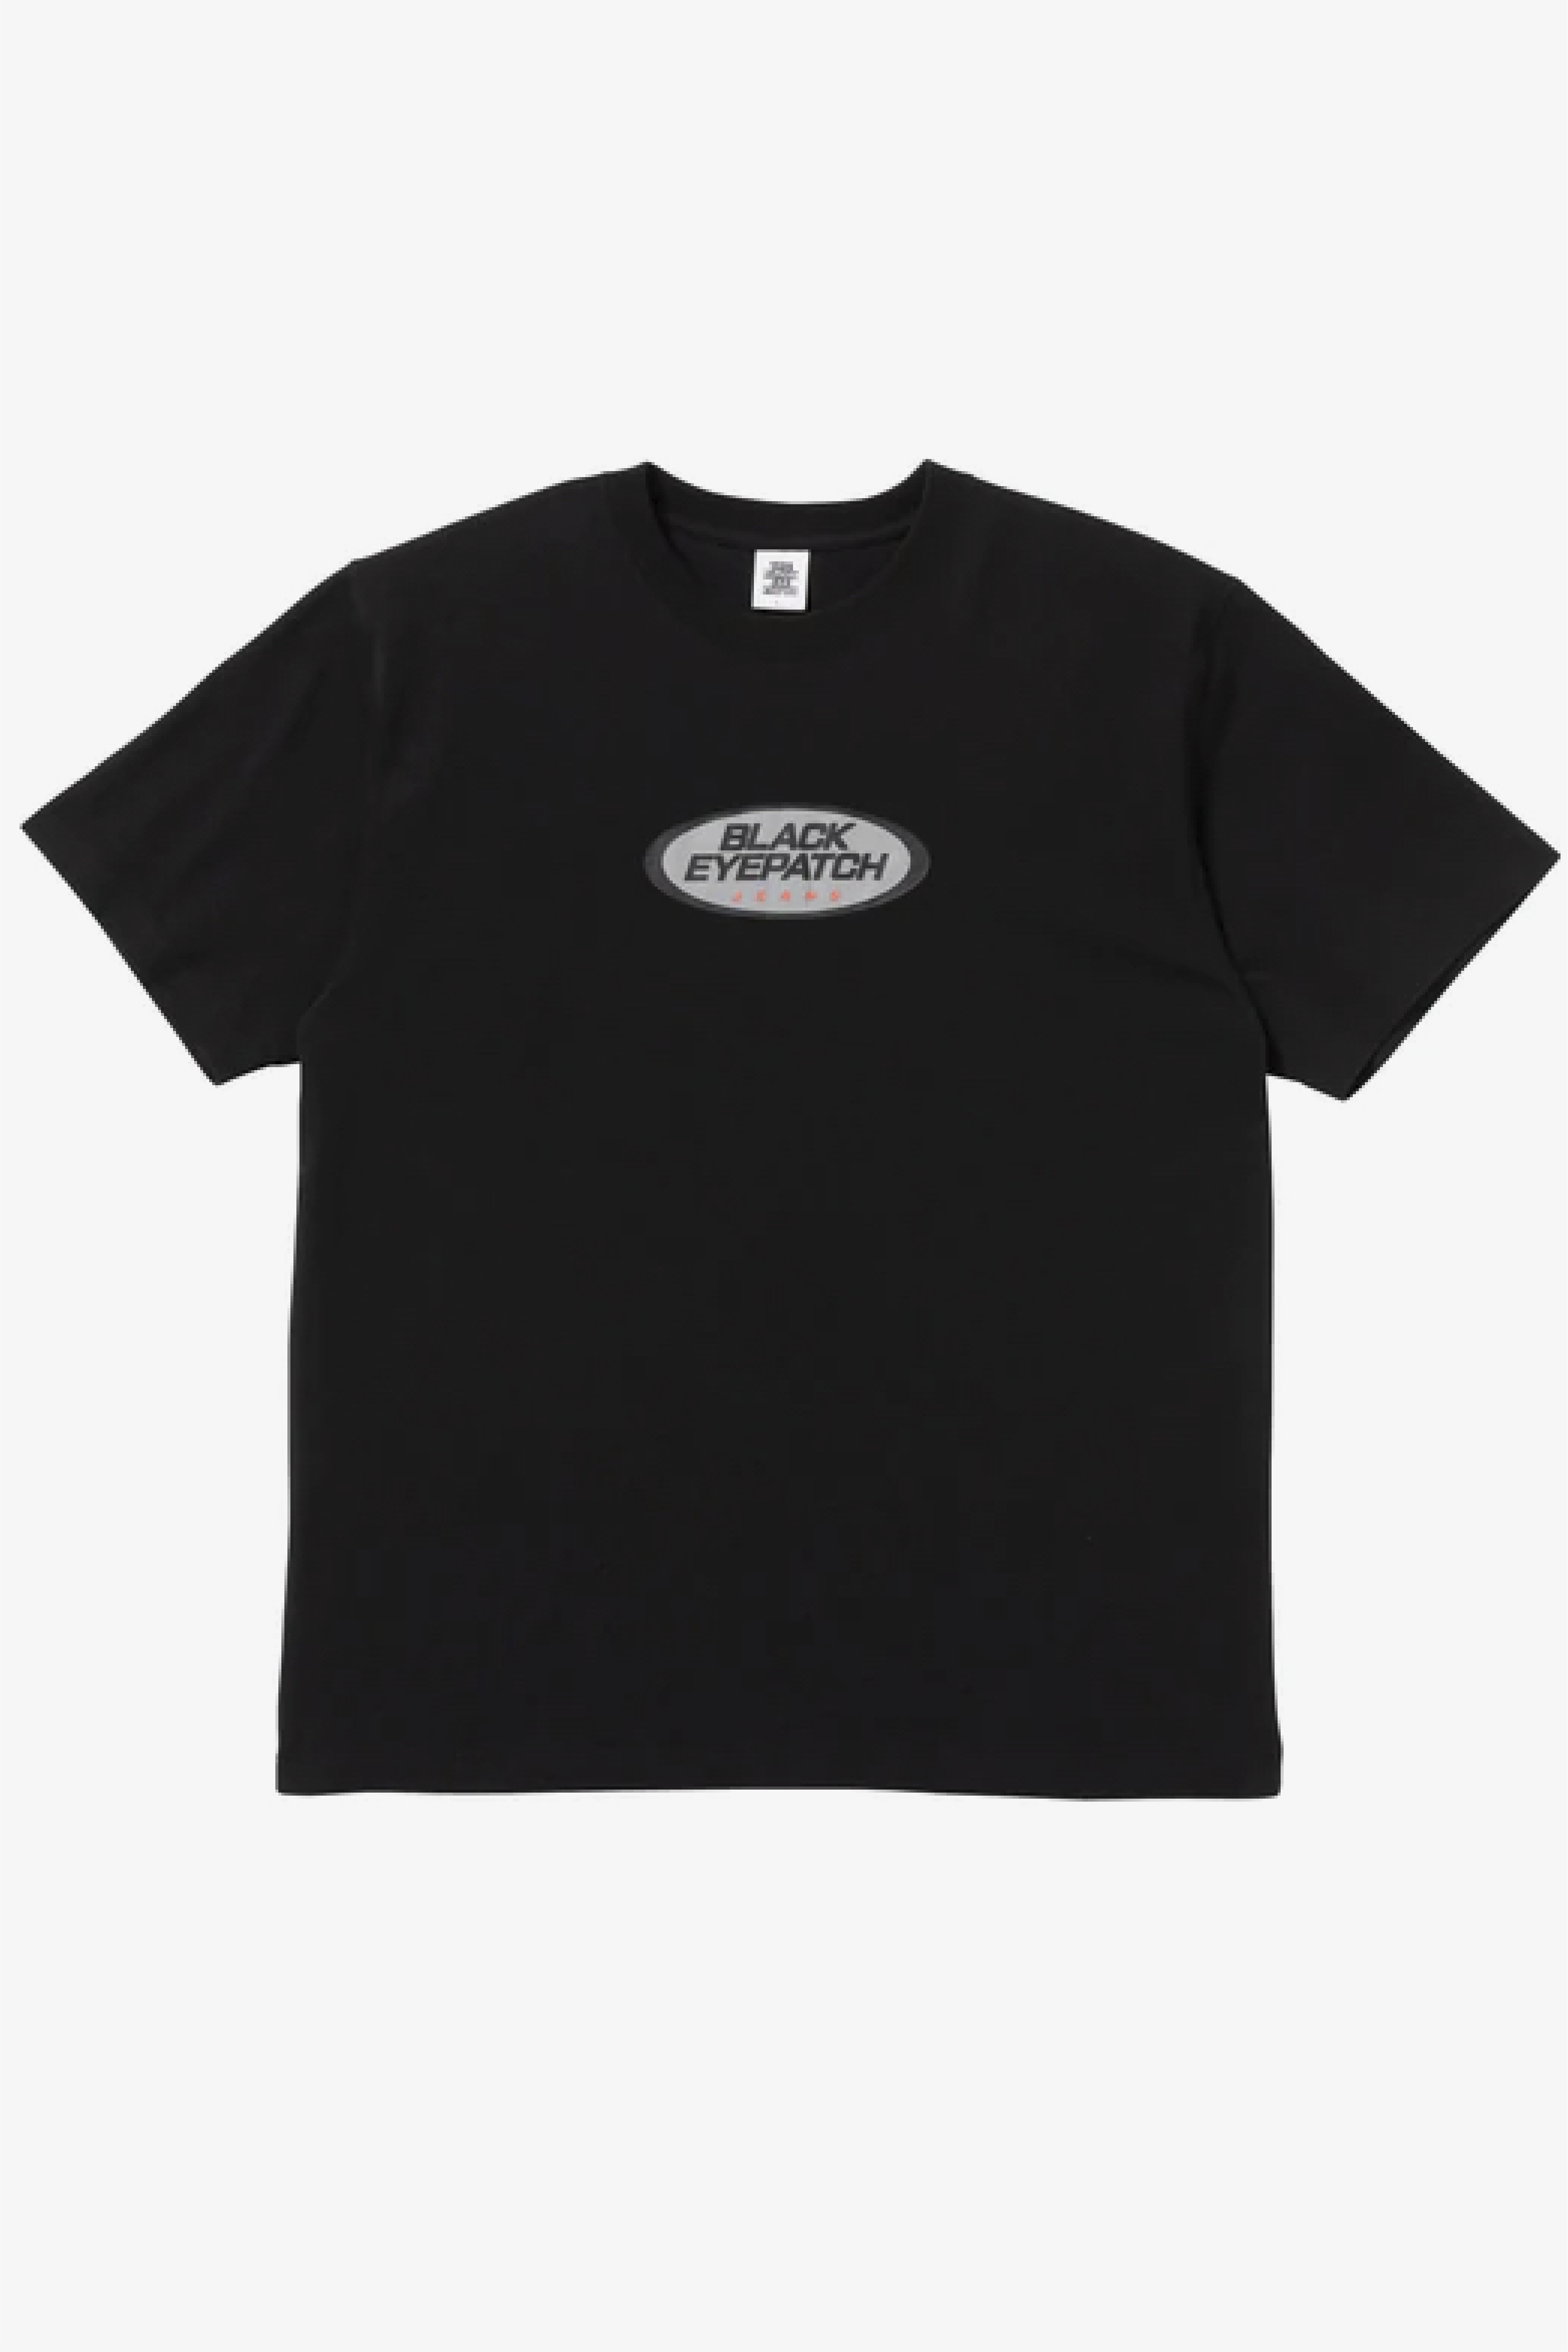 Selectshop FRAME - BLACKEYEPATCH Reflector Jeans Logo Tee T-Shirt Dubai